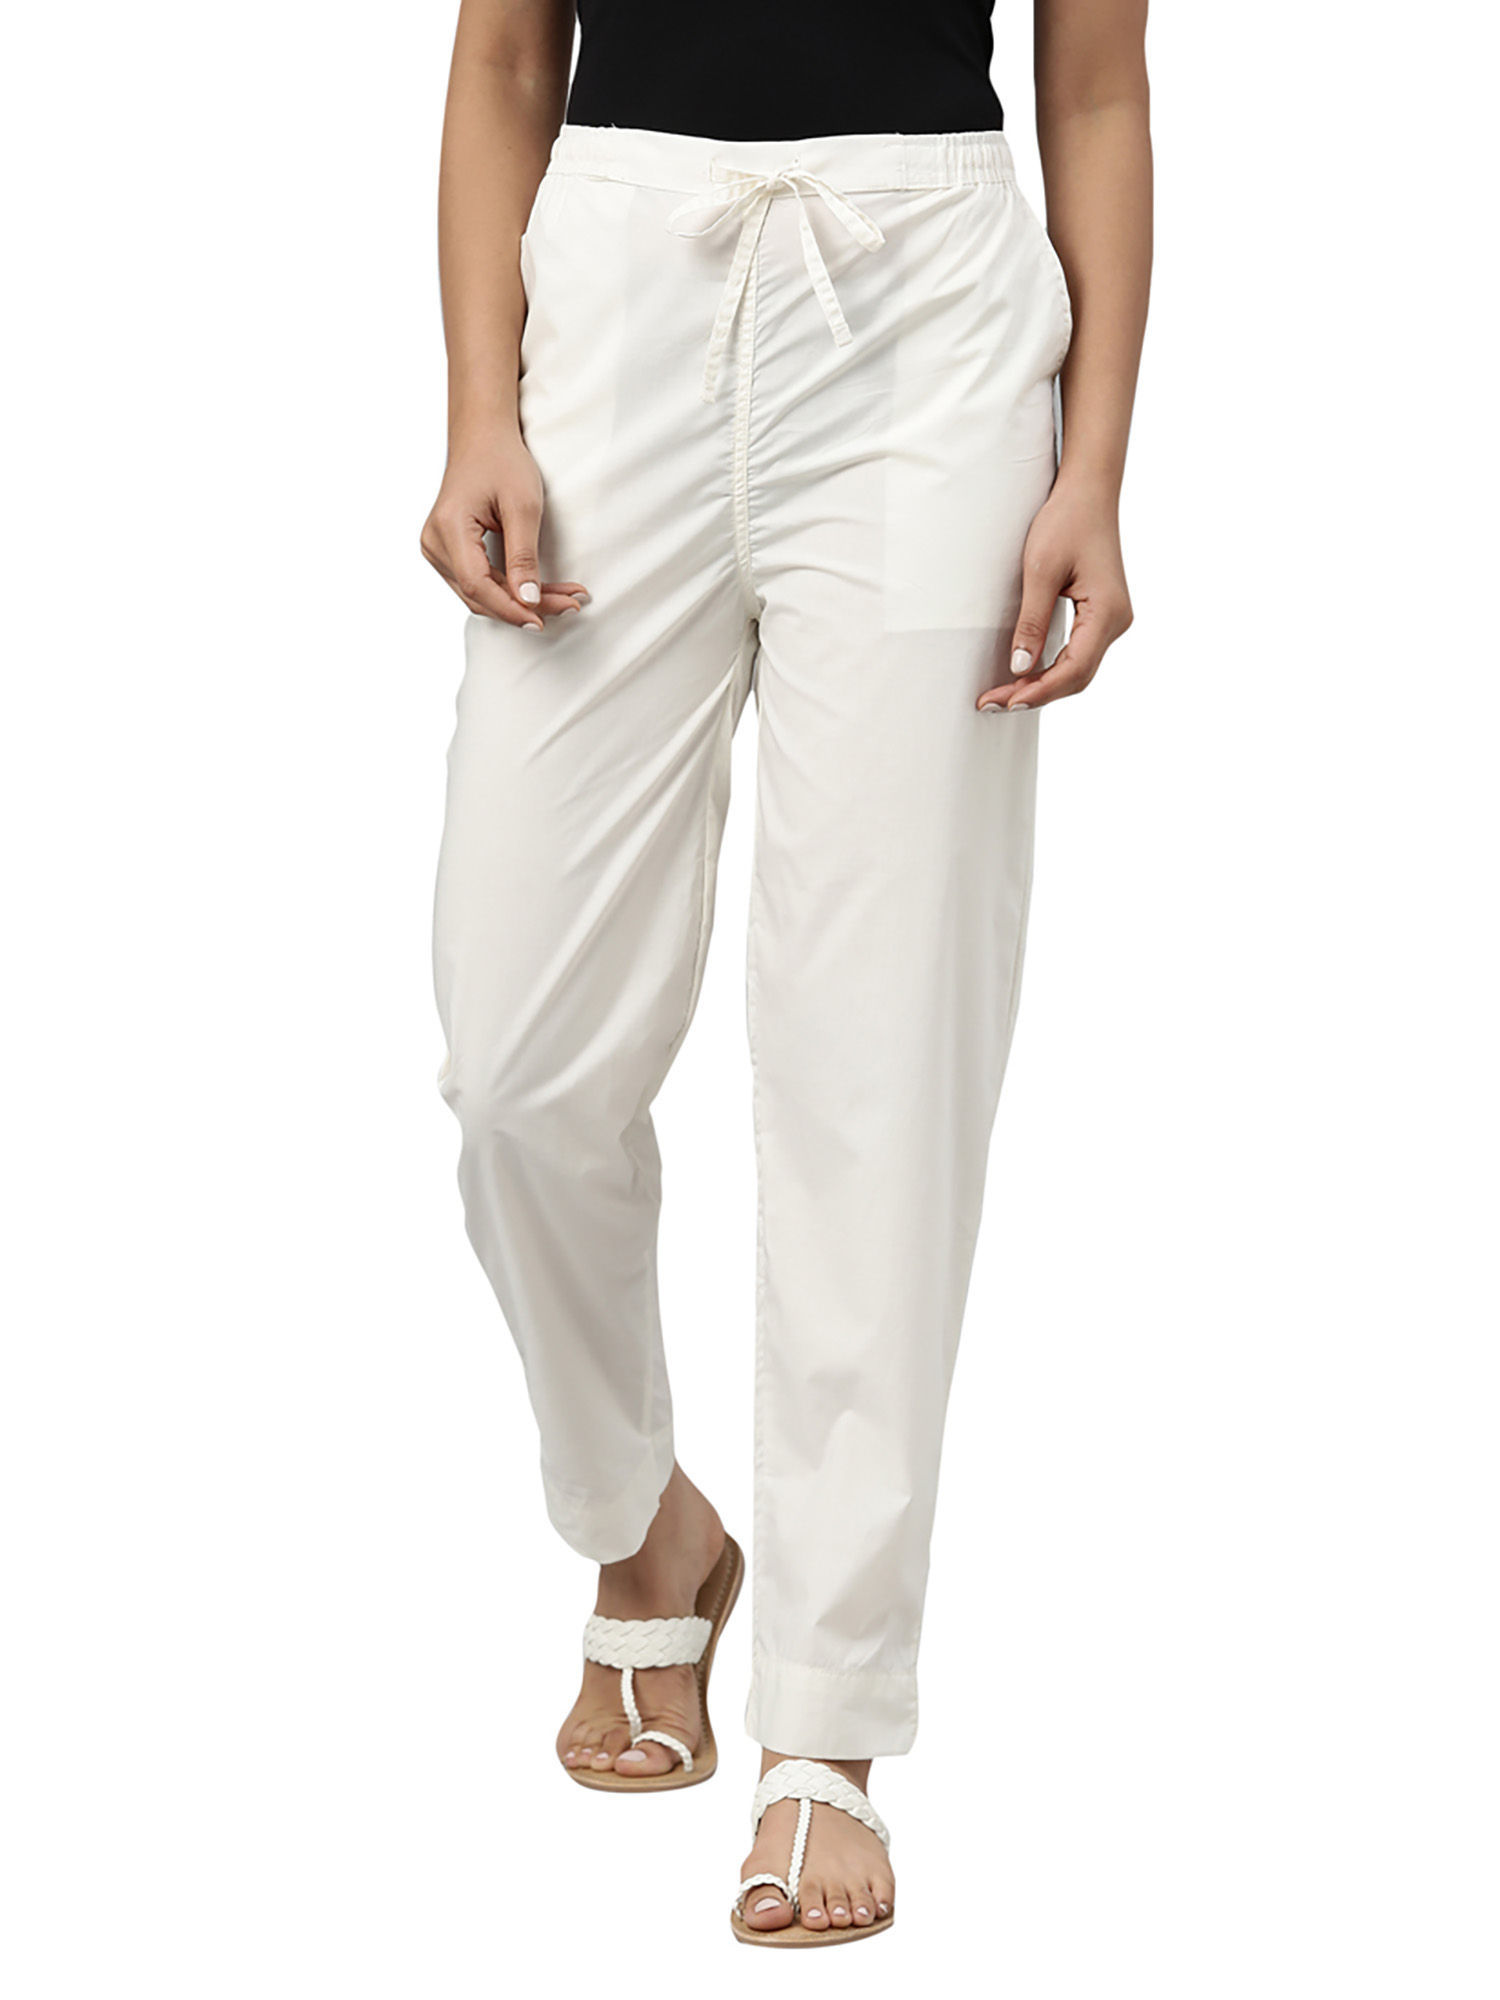 Buy Hooever Womens Casual High Waist Cotton Linen Straight Leg Pants Lounge  Pants White Small at Amazonin